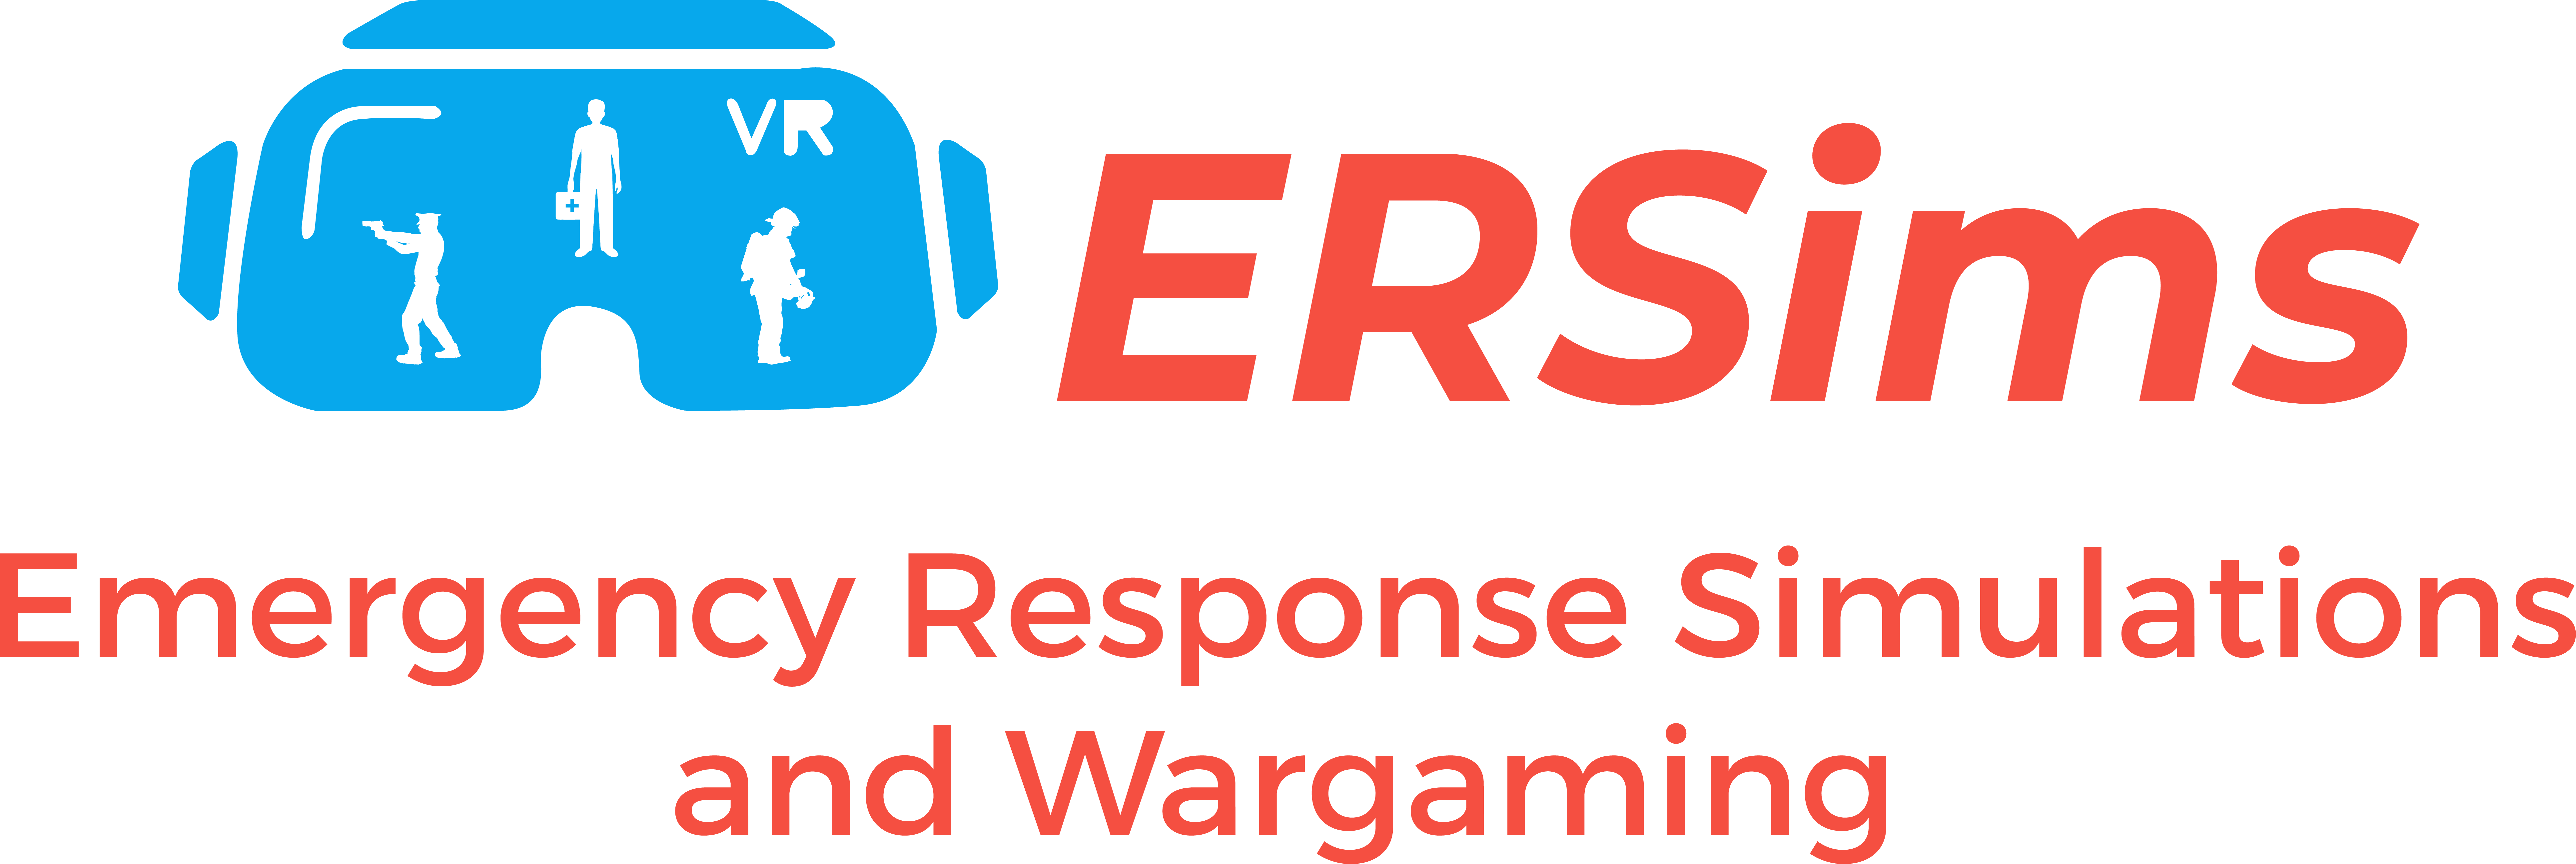 emergency-response-simulations